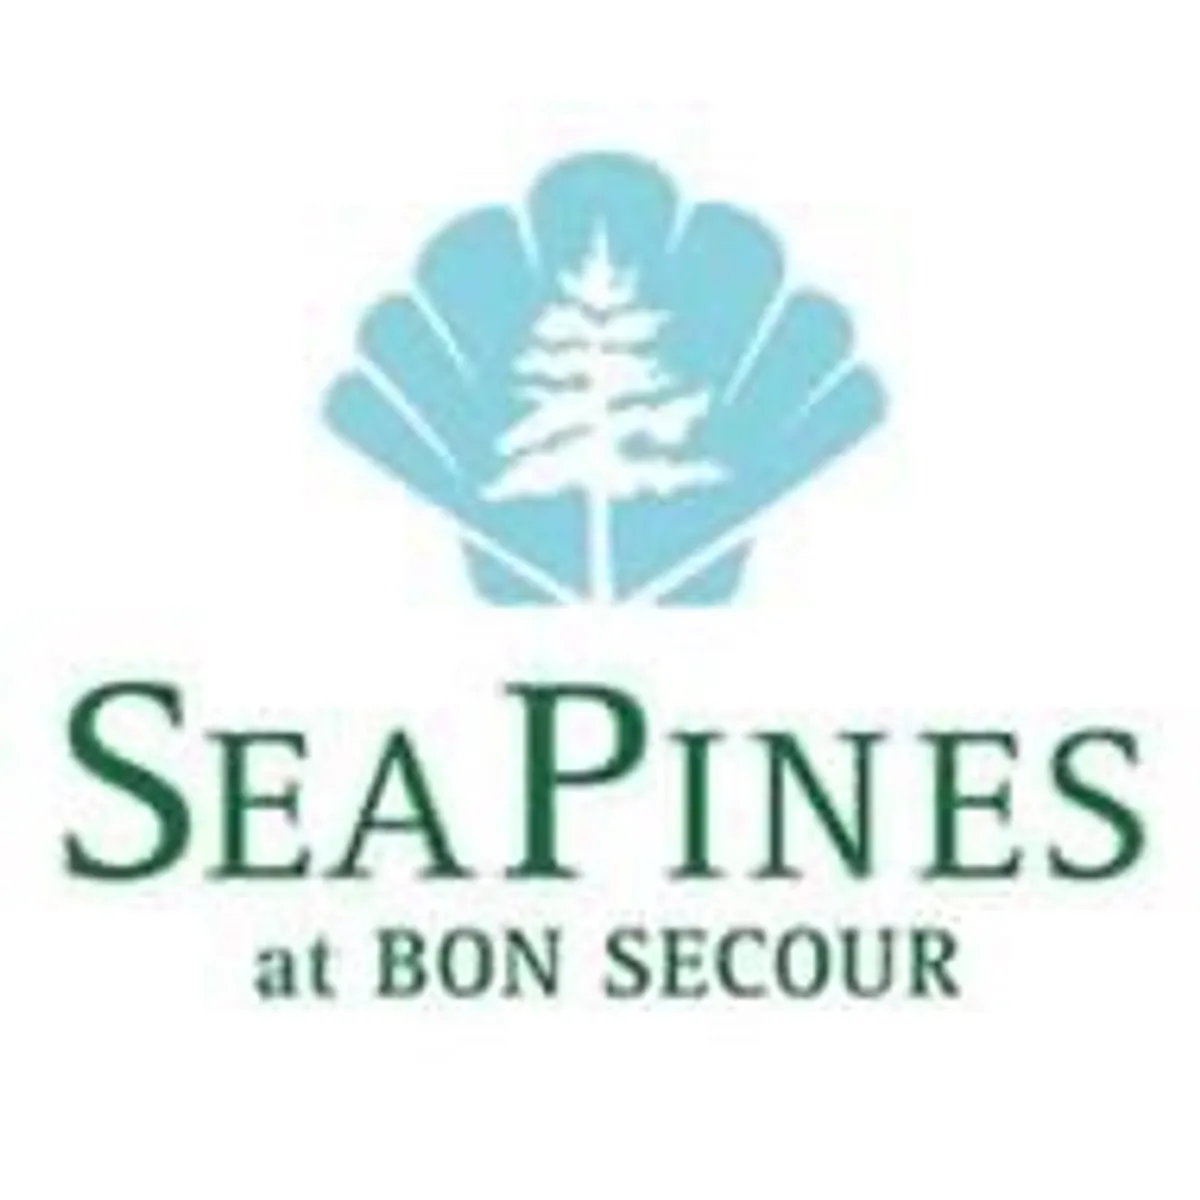 Sea Pines